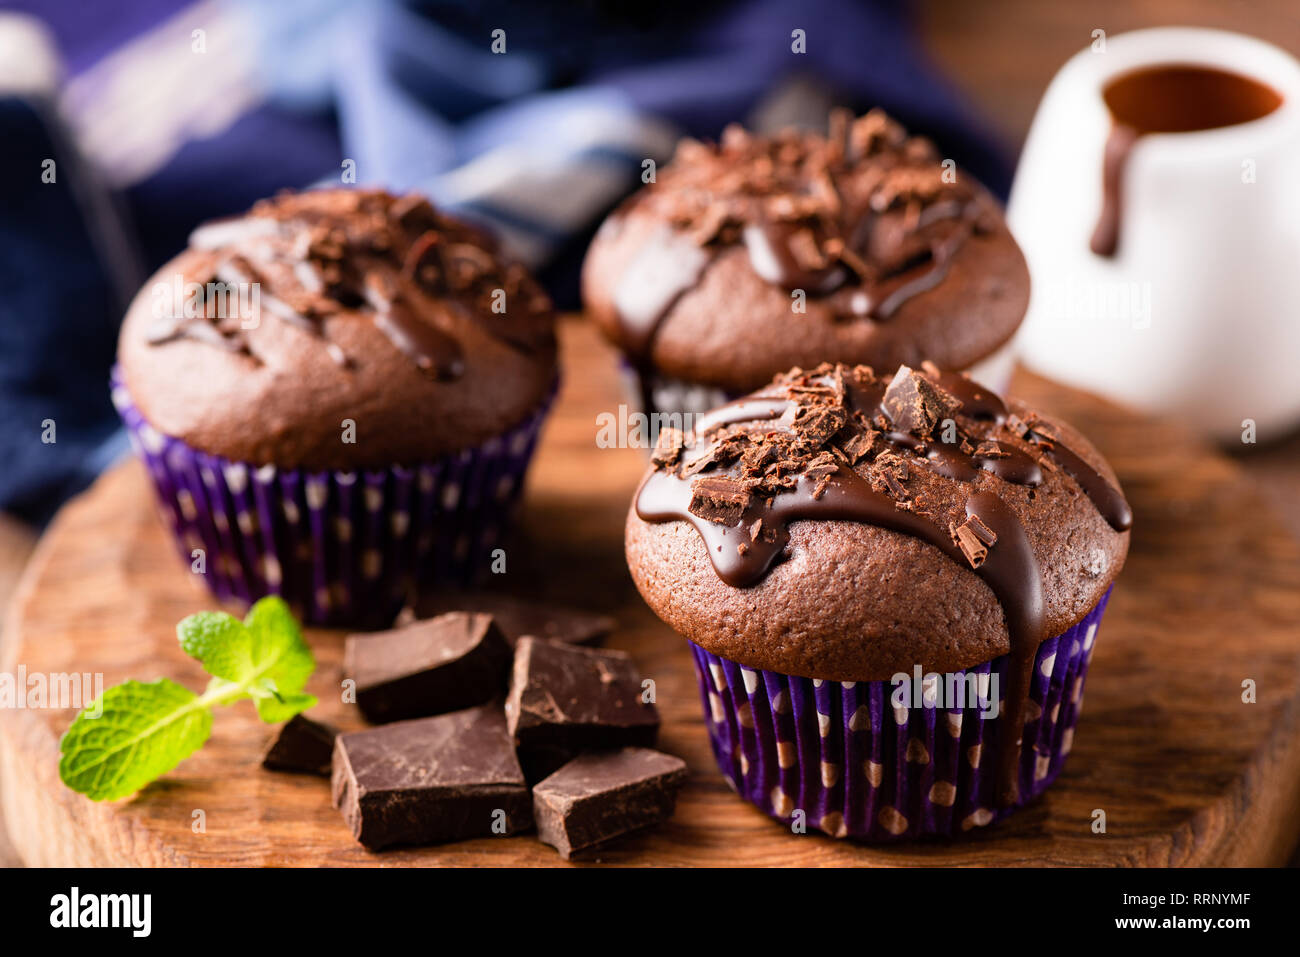 Chocolate muffins o magdalenas decoradas con ganache de chocolate.  Acercamiento Fotografía de stock - Alamy